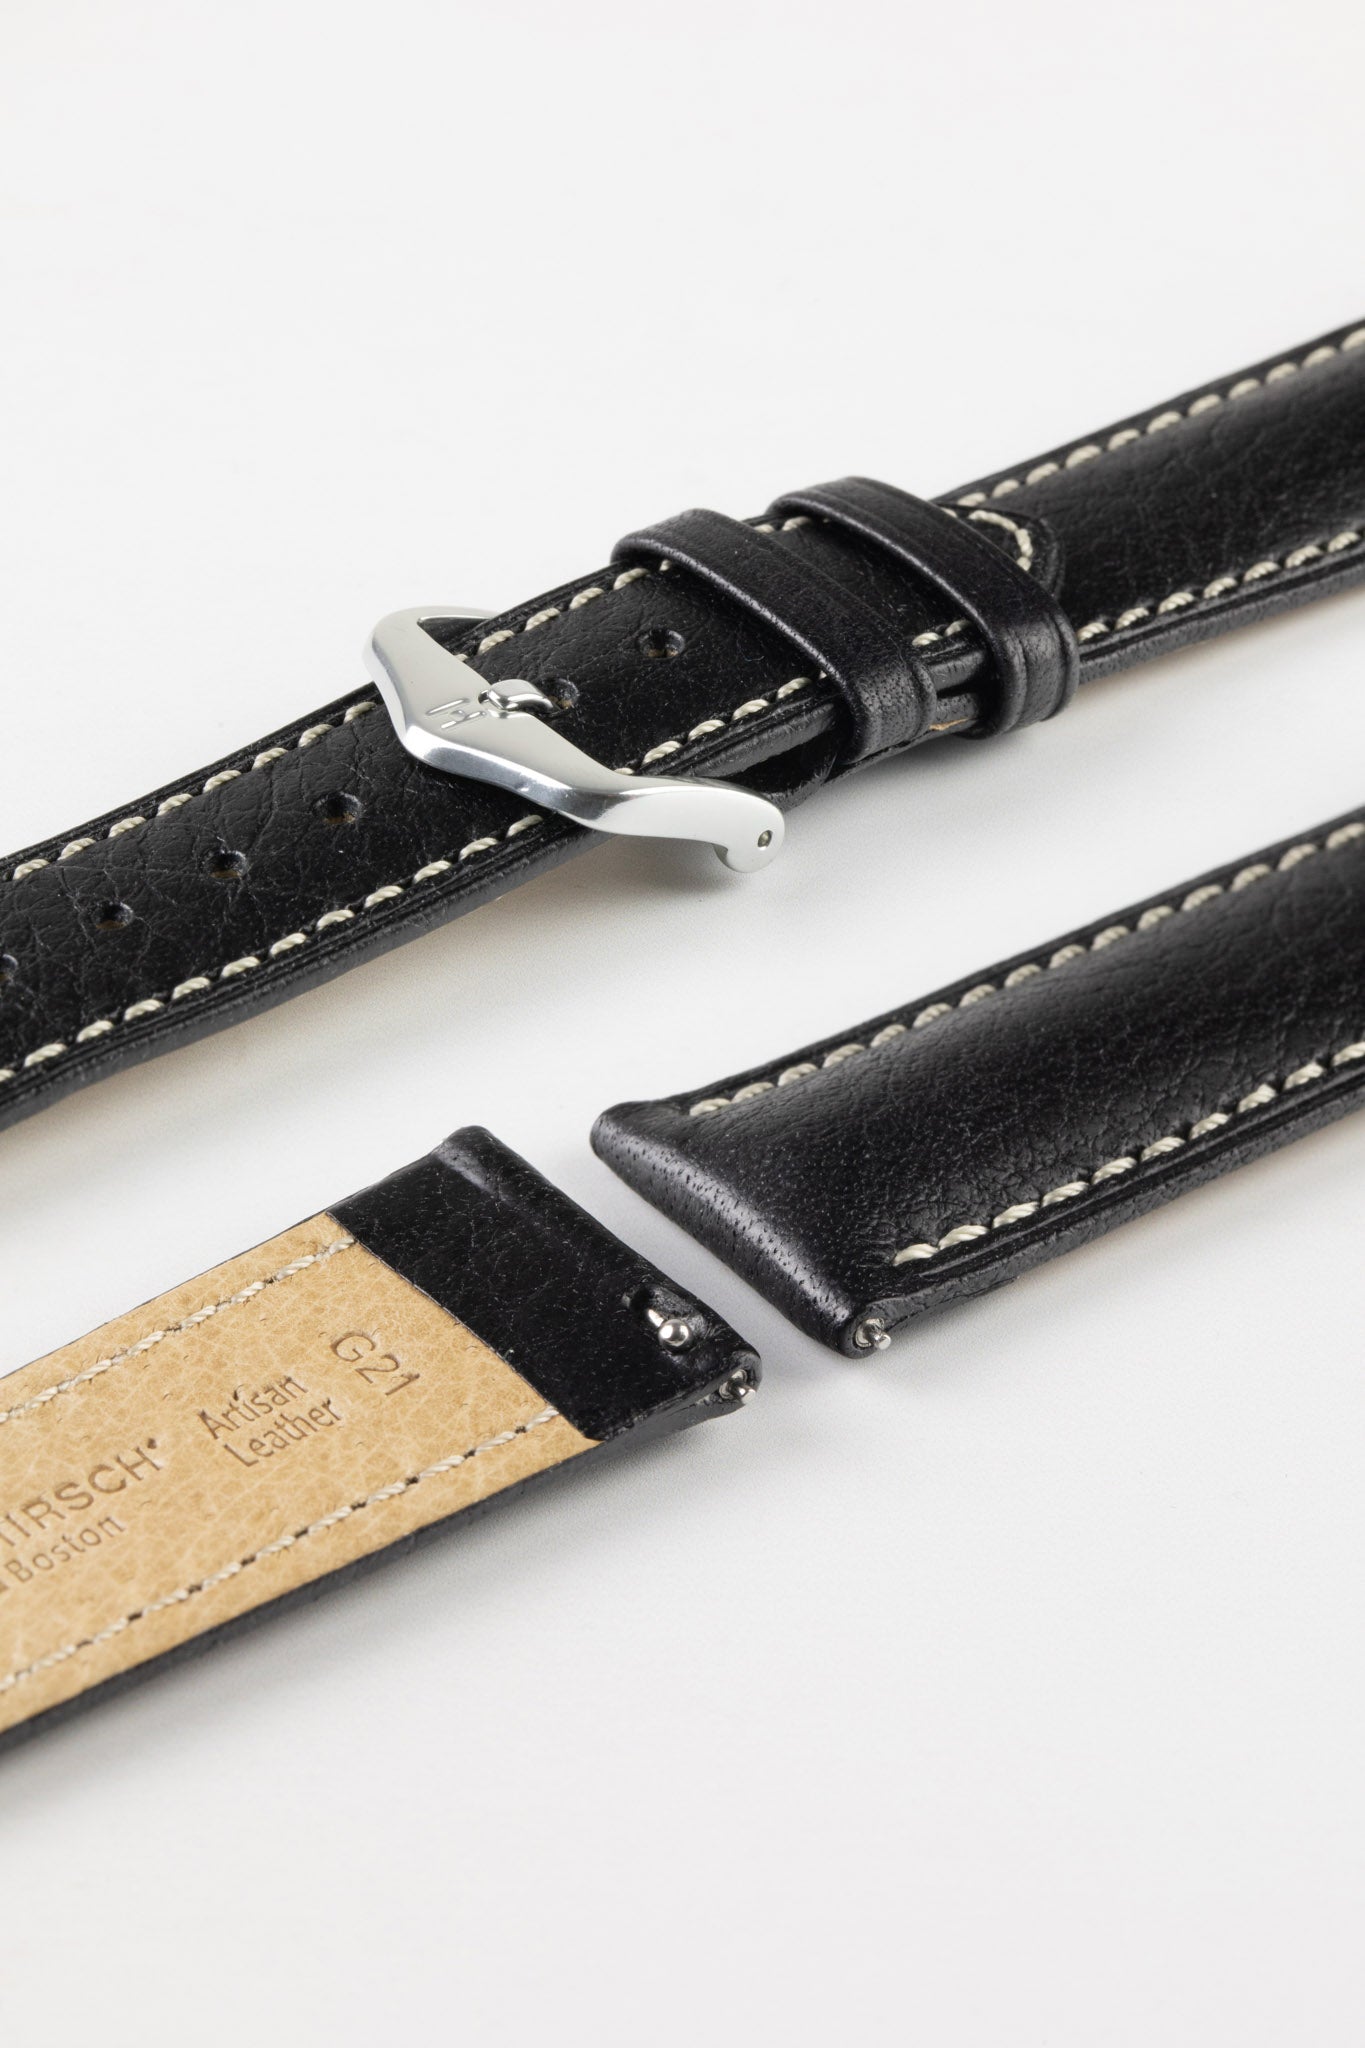 Two-Stitch Vintage Buffalo Leather Watch Strap